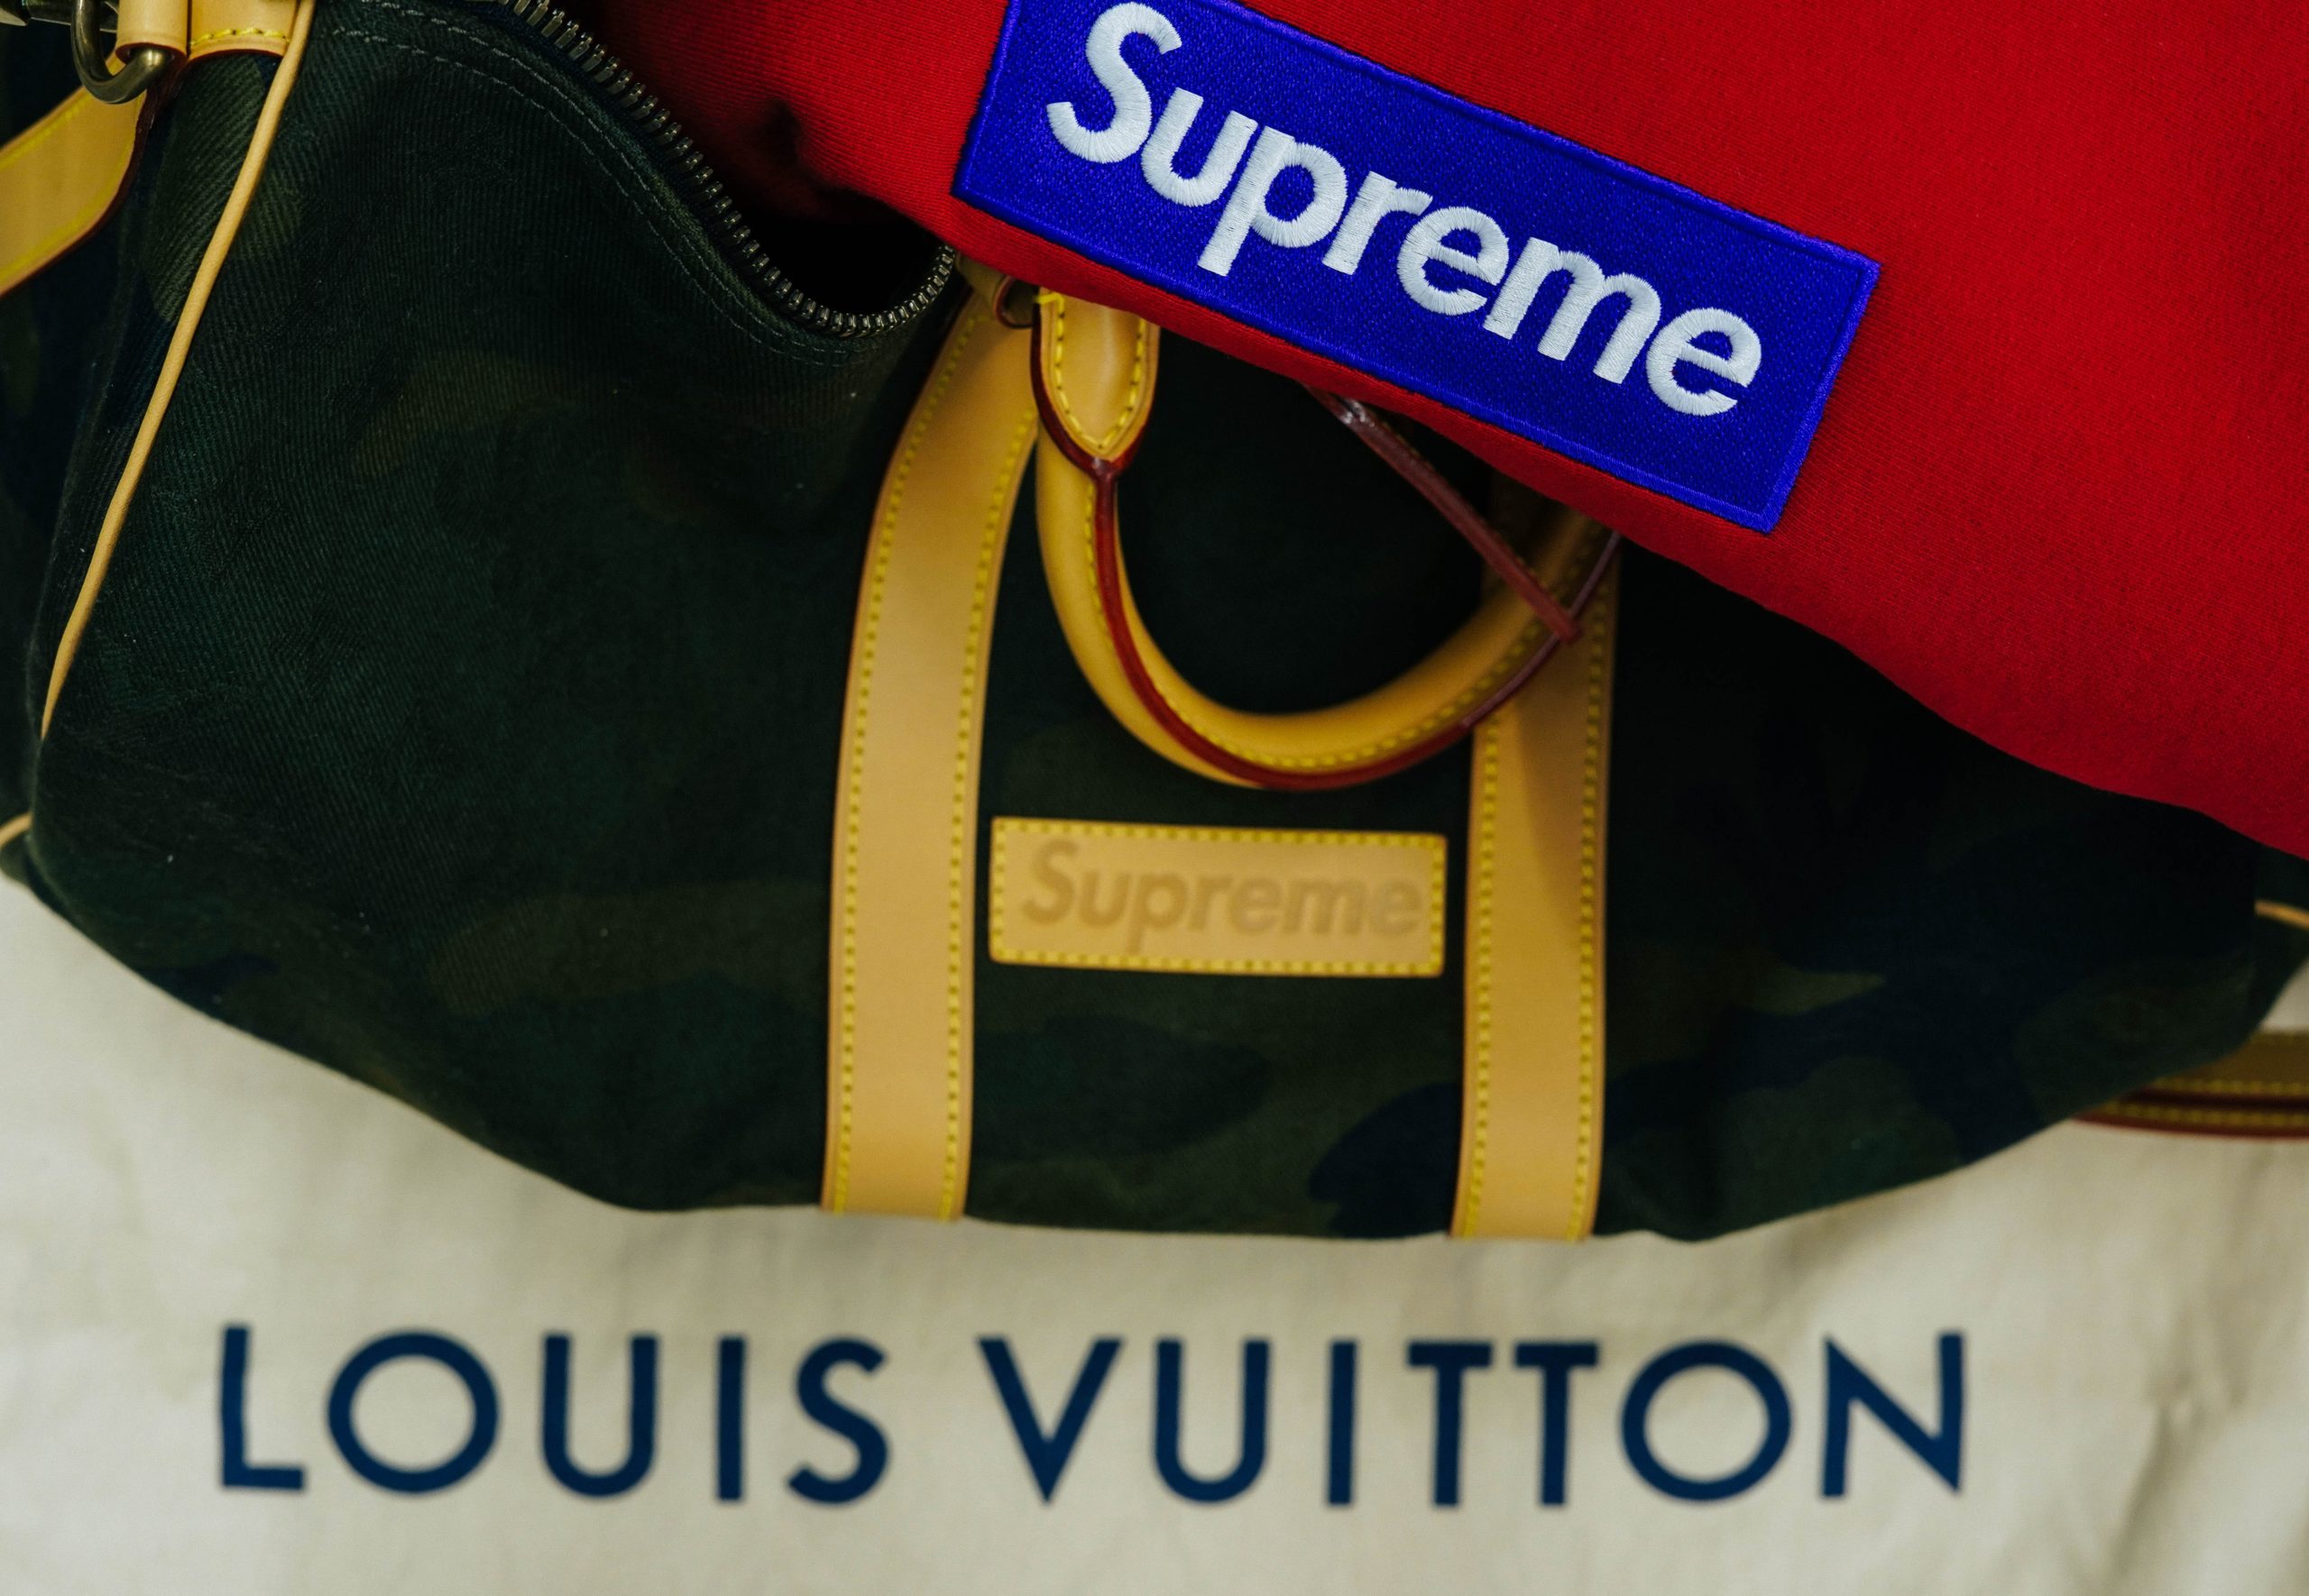 Win Supreme x Louis Vuitton's 45 Duffel Bag Now